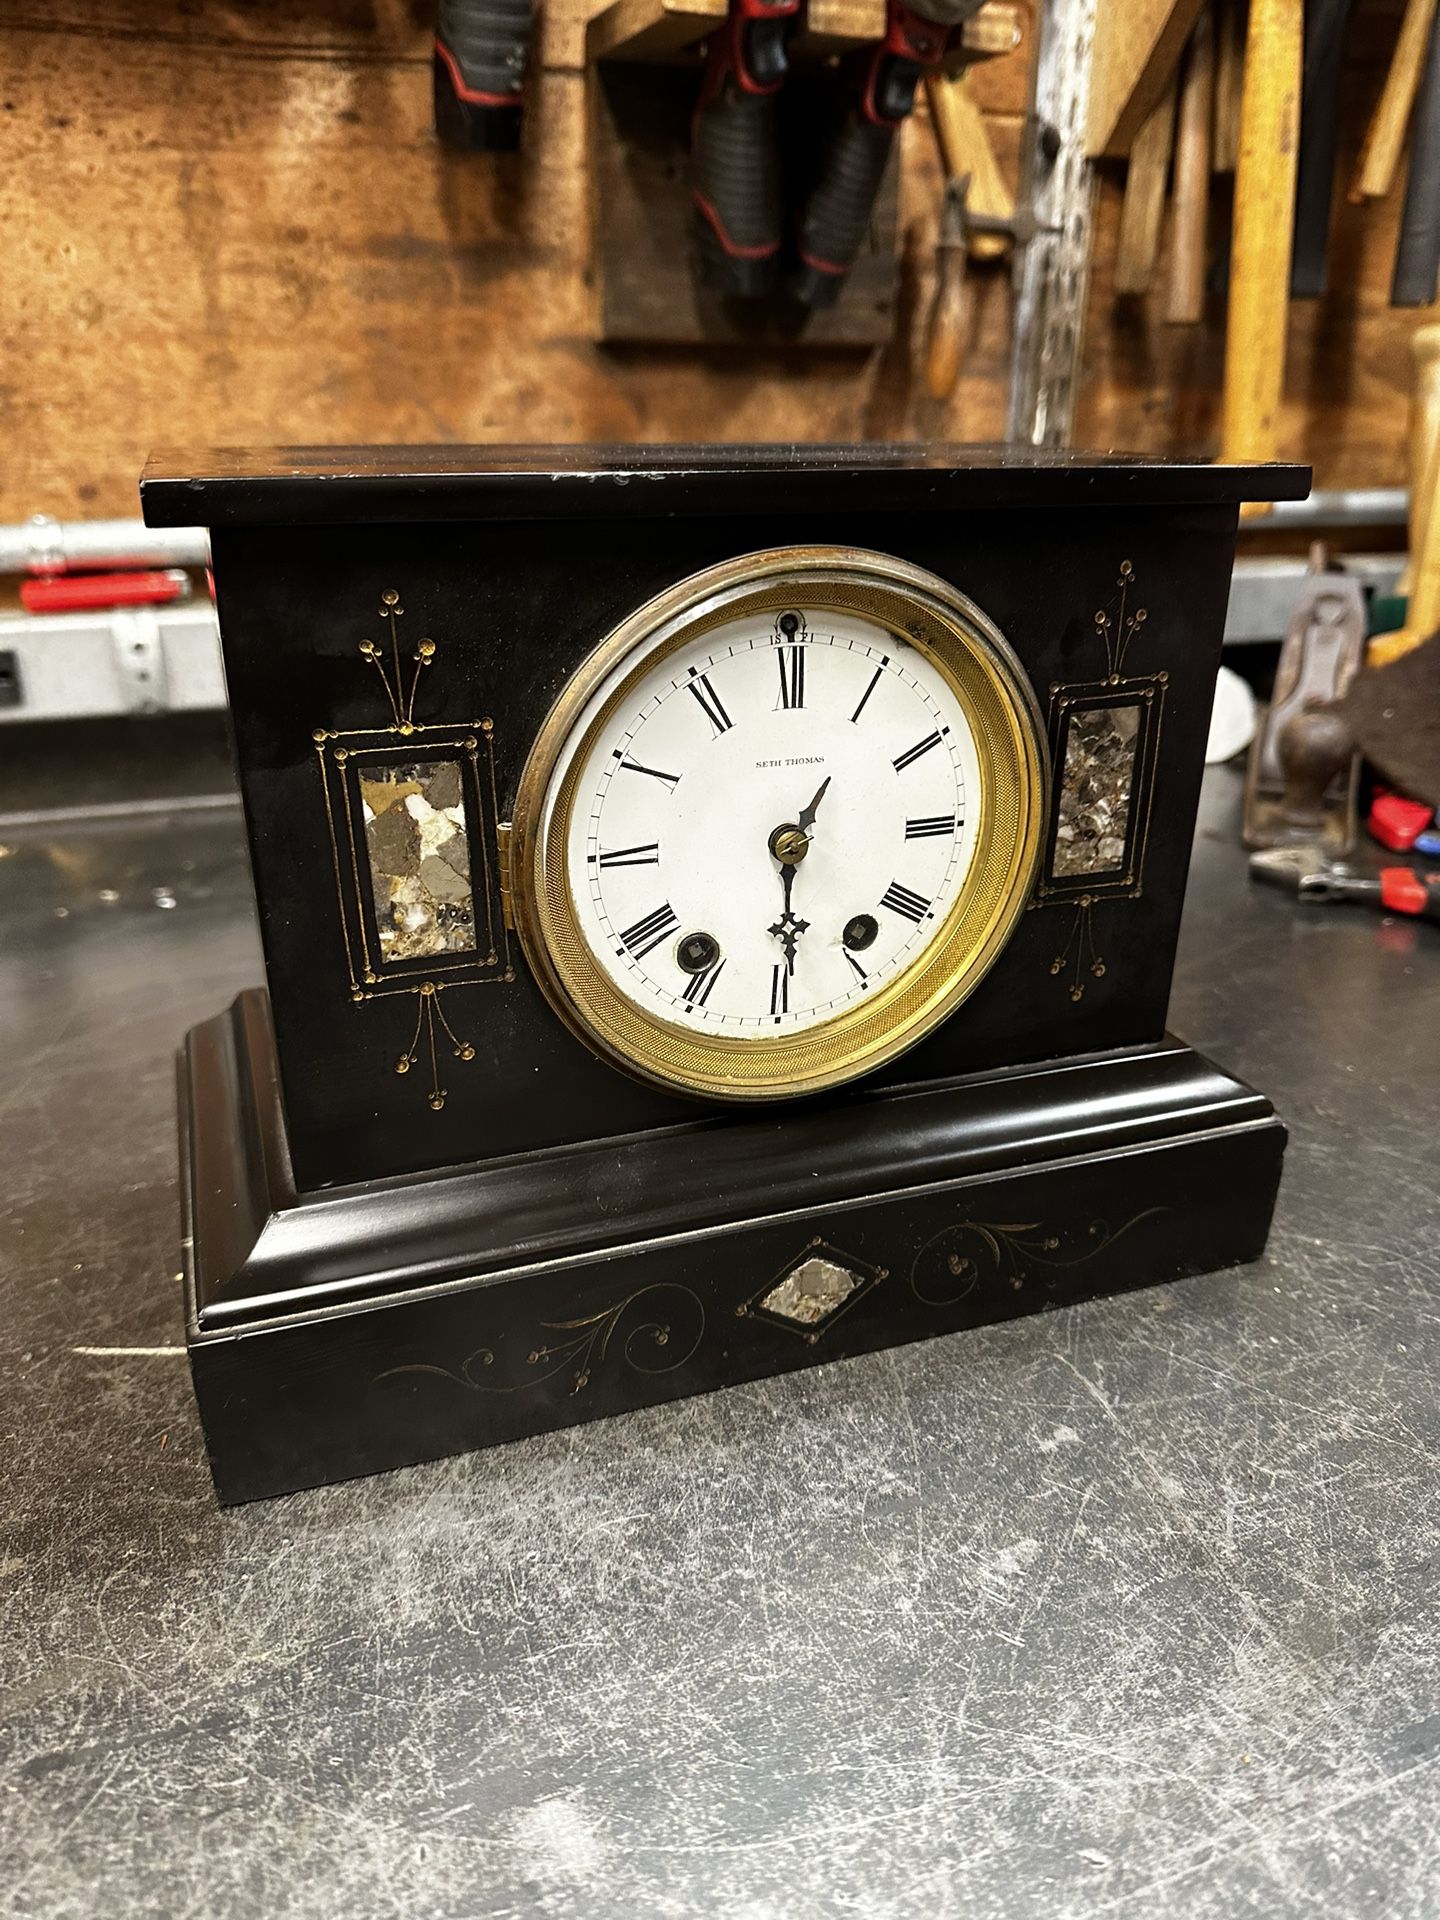 Antique Seth Thomas Adamantine Mantle Clock Shasta Early 1900s HEAVY Not Working